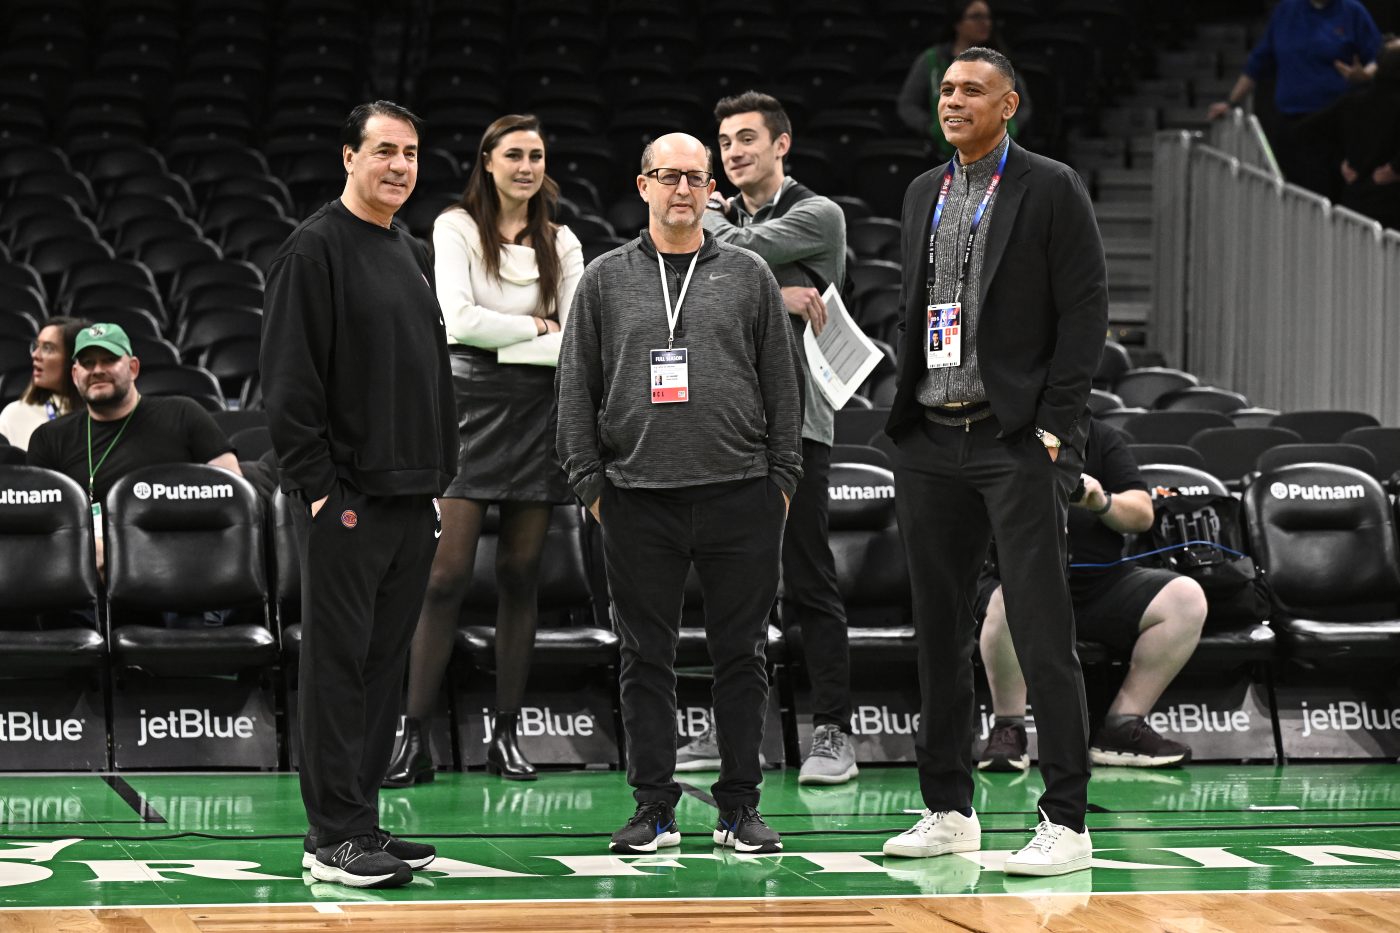 NBA News: Legendarny trener opuszcza Celtics dla Clippers